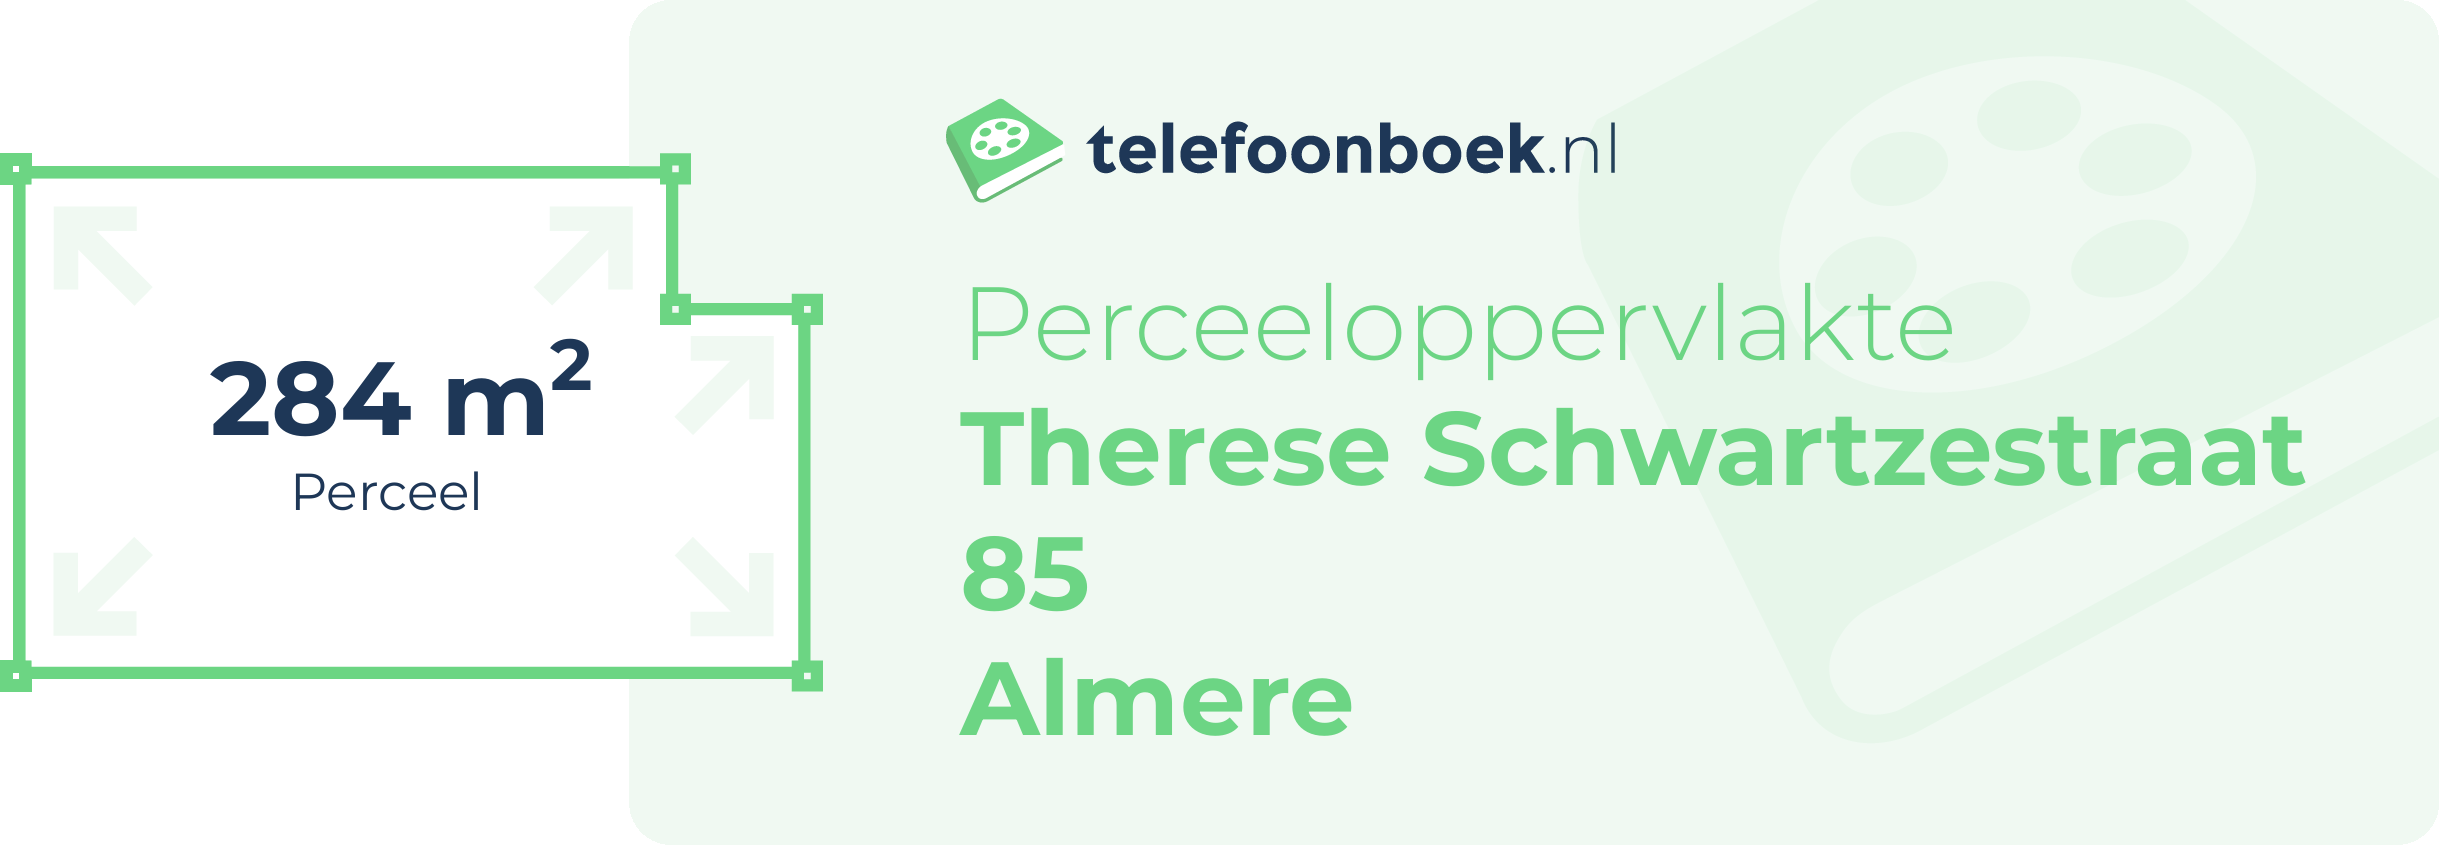 Perceeloppervlakte Therese Schwartzestraat 85 Almere